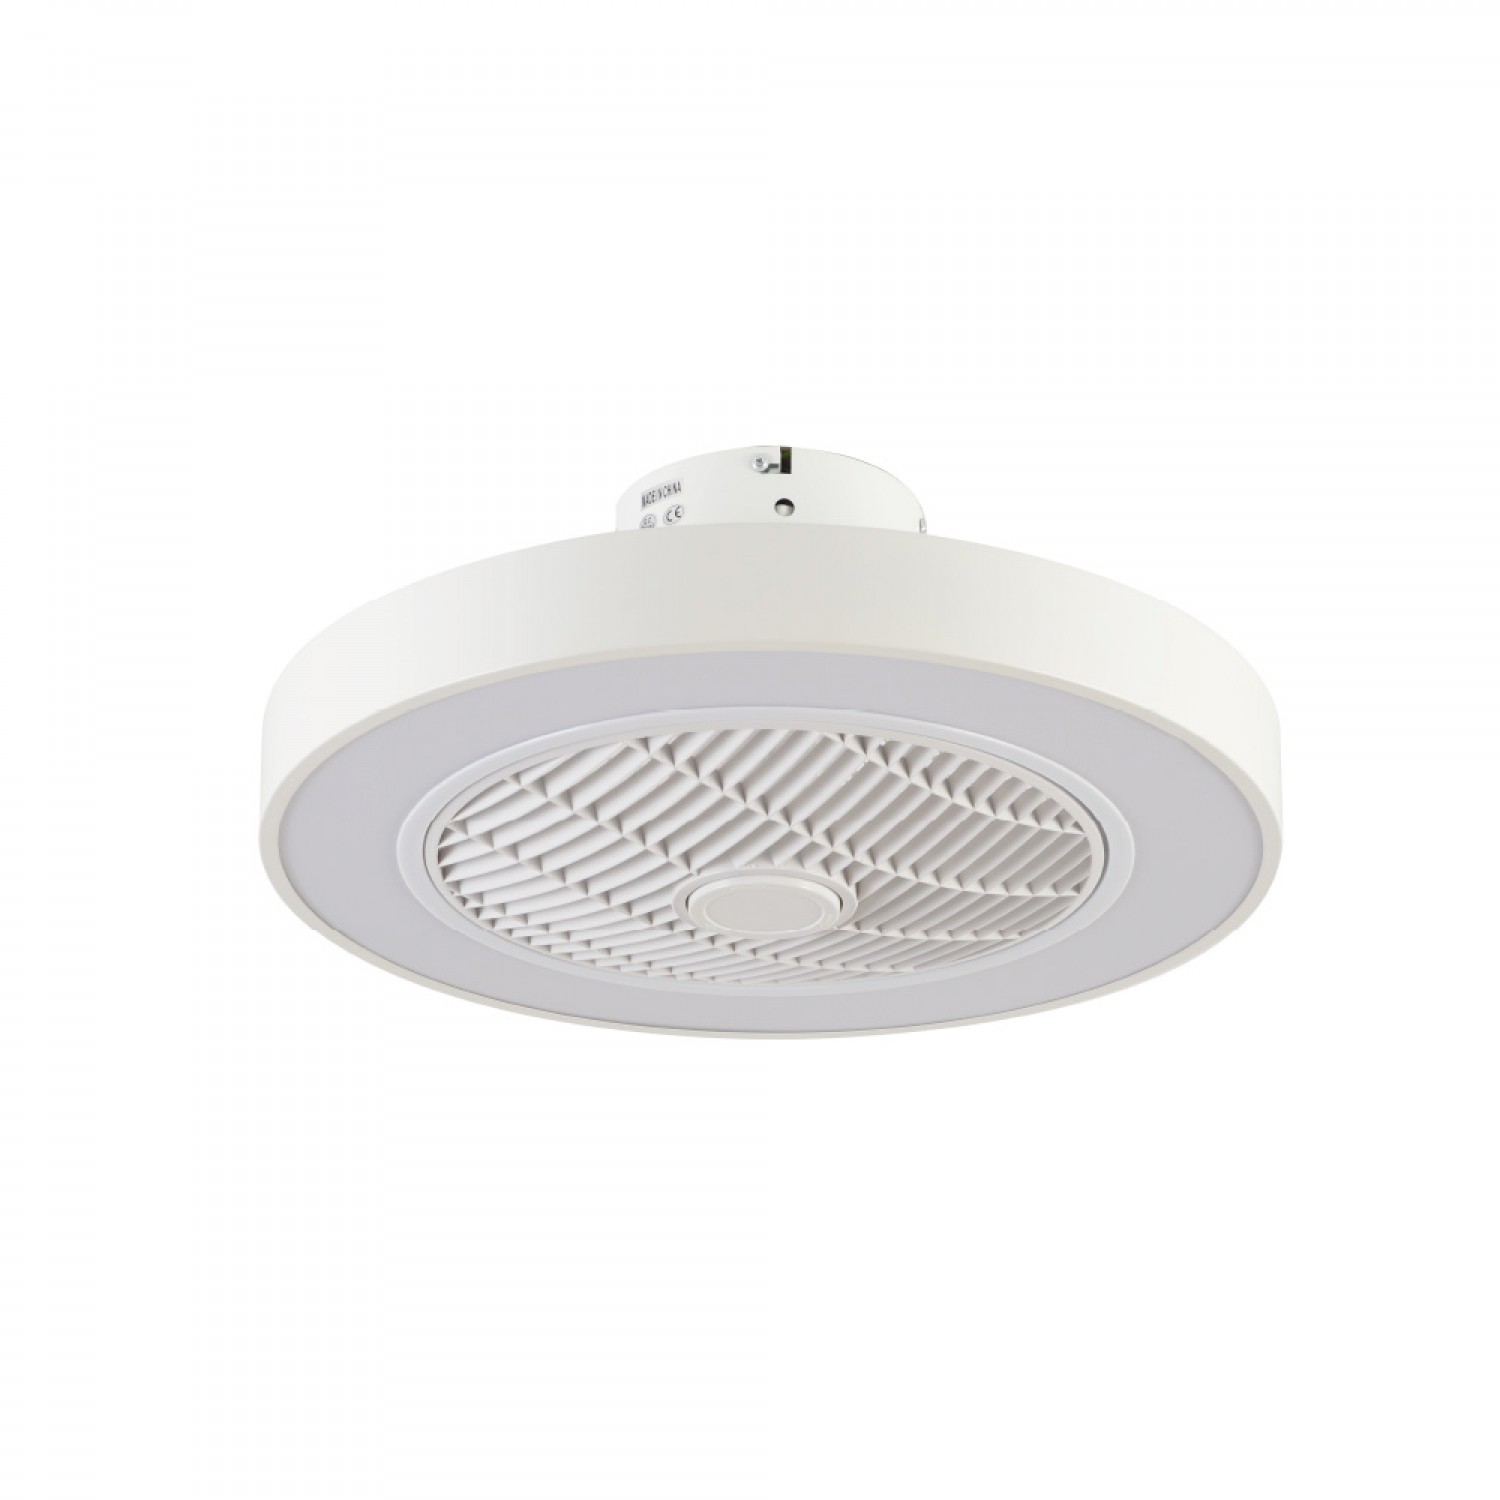 Chilko 36W 3CCT LED Fan Light in White Color (101000310)